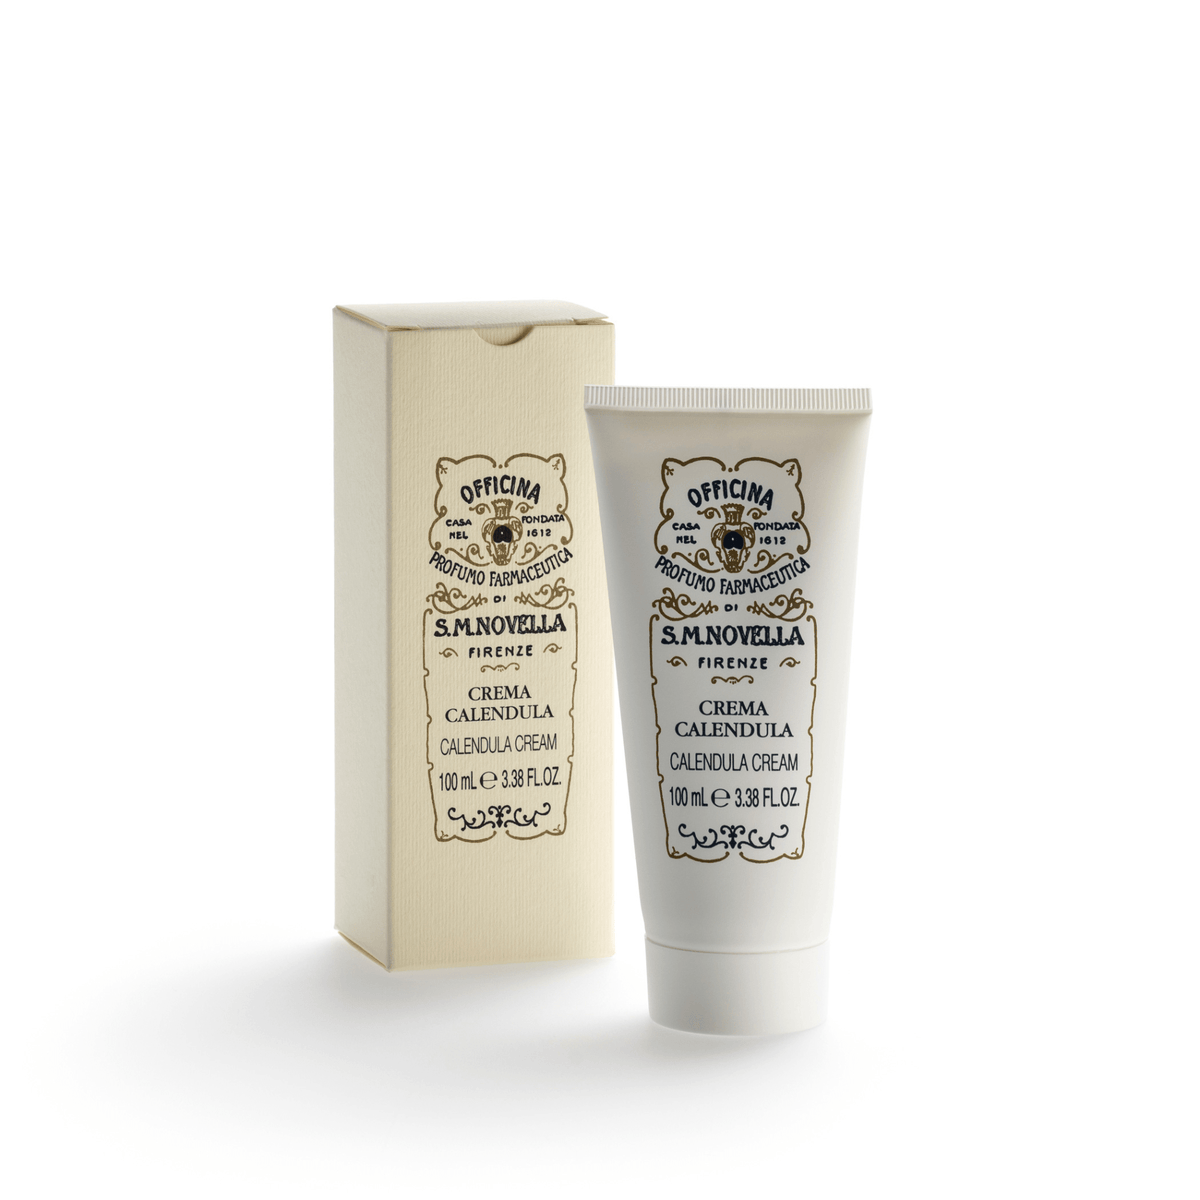 Primary Image of Calendula Cream (Crema Calendula)